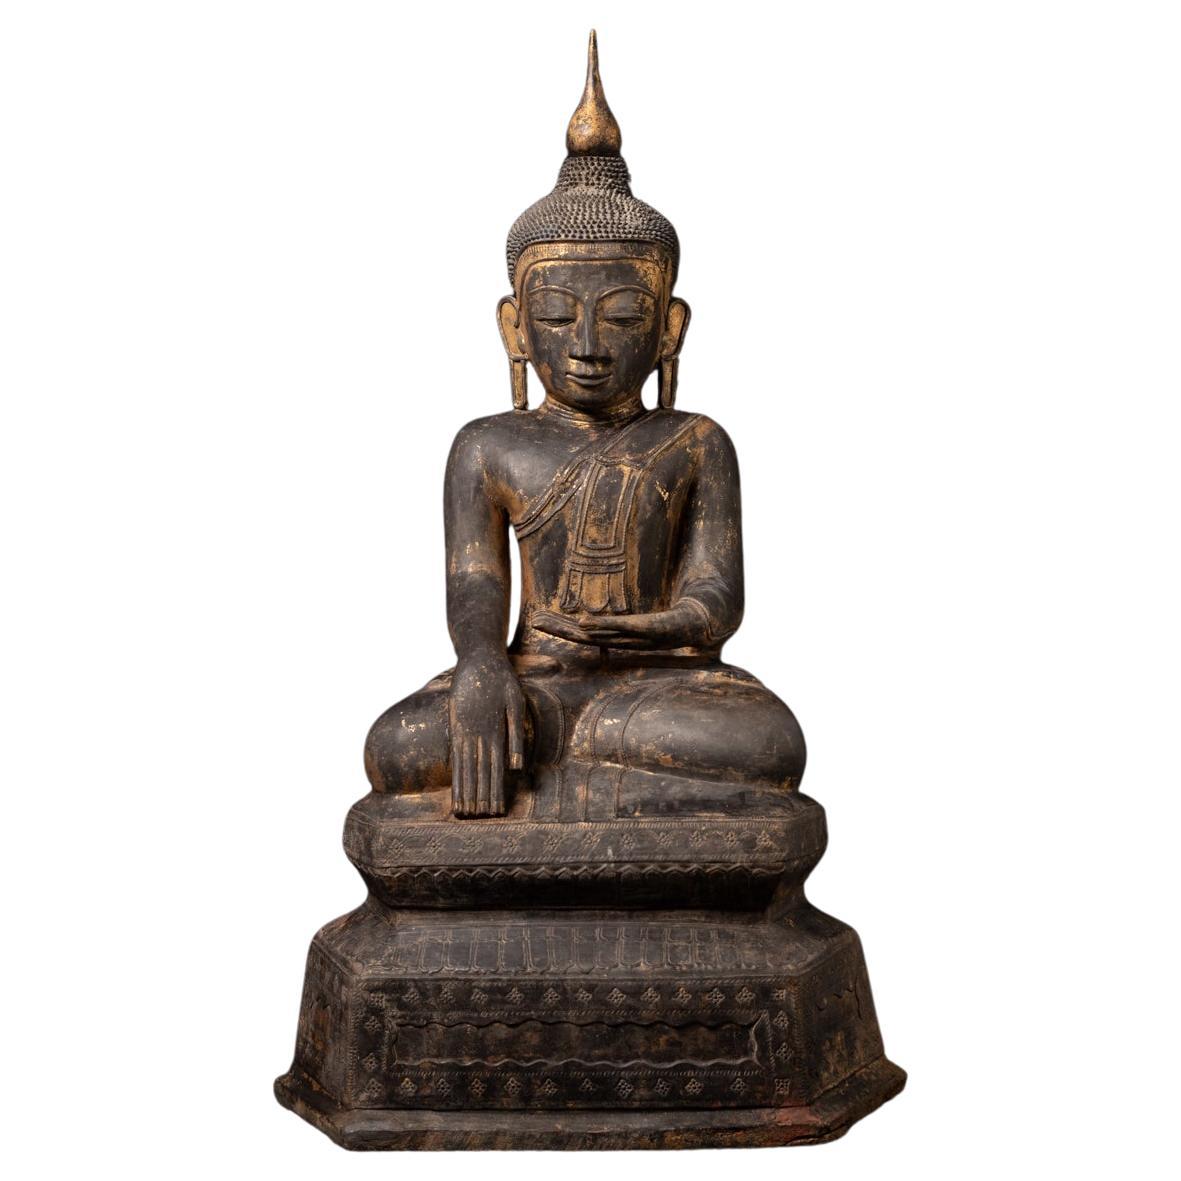 Speziale antike burmesische Buddha-Statue aus Burma aus dem 18. Jahrhundert